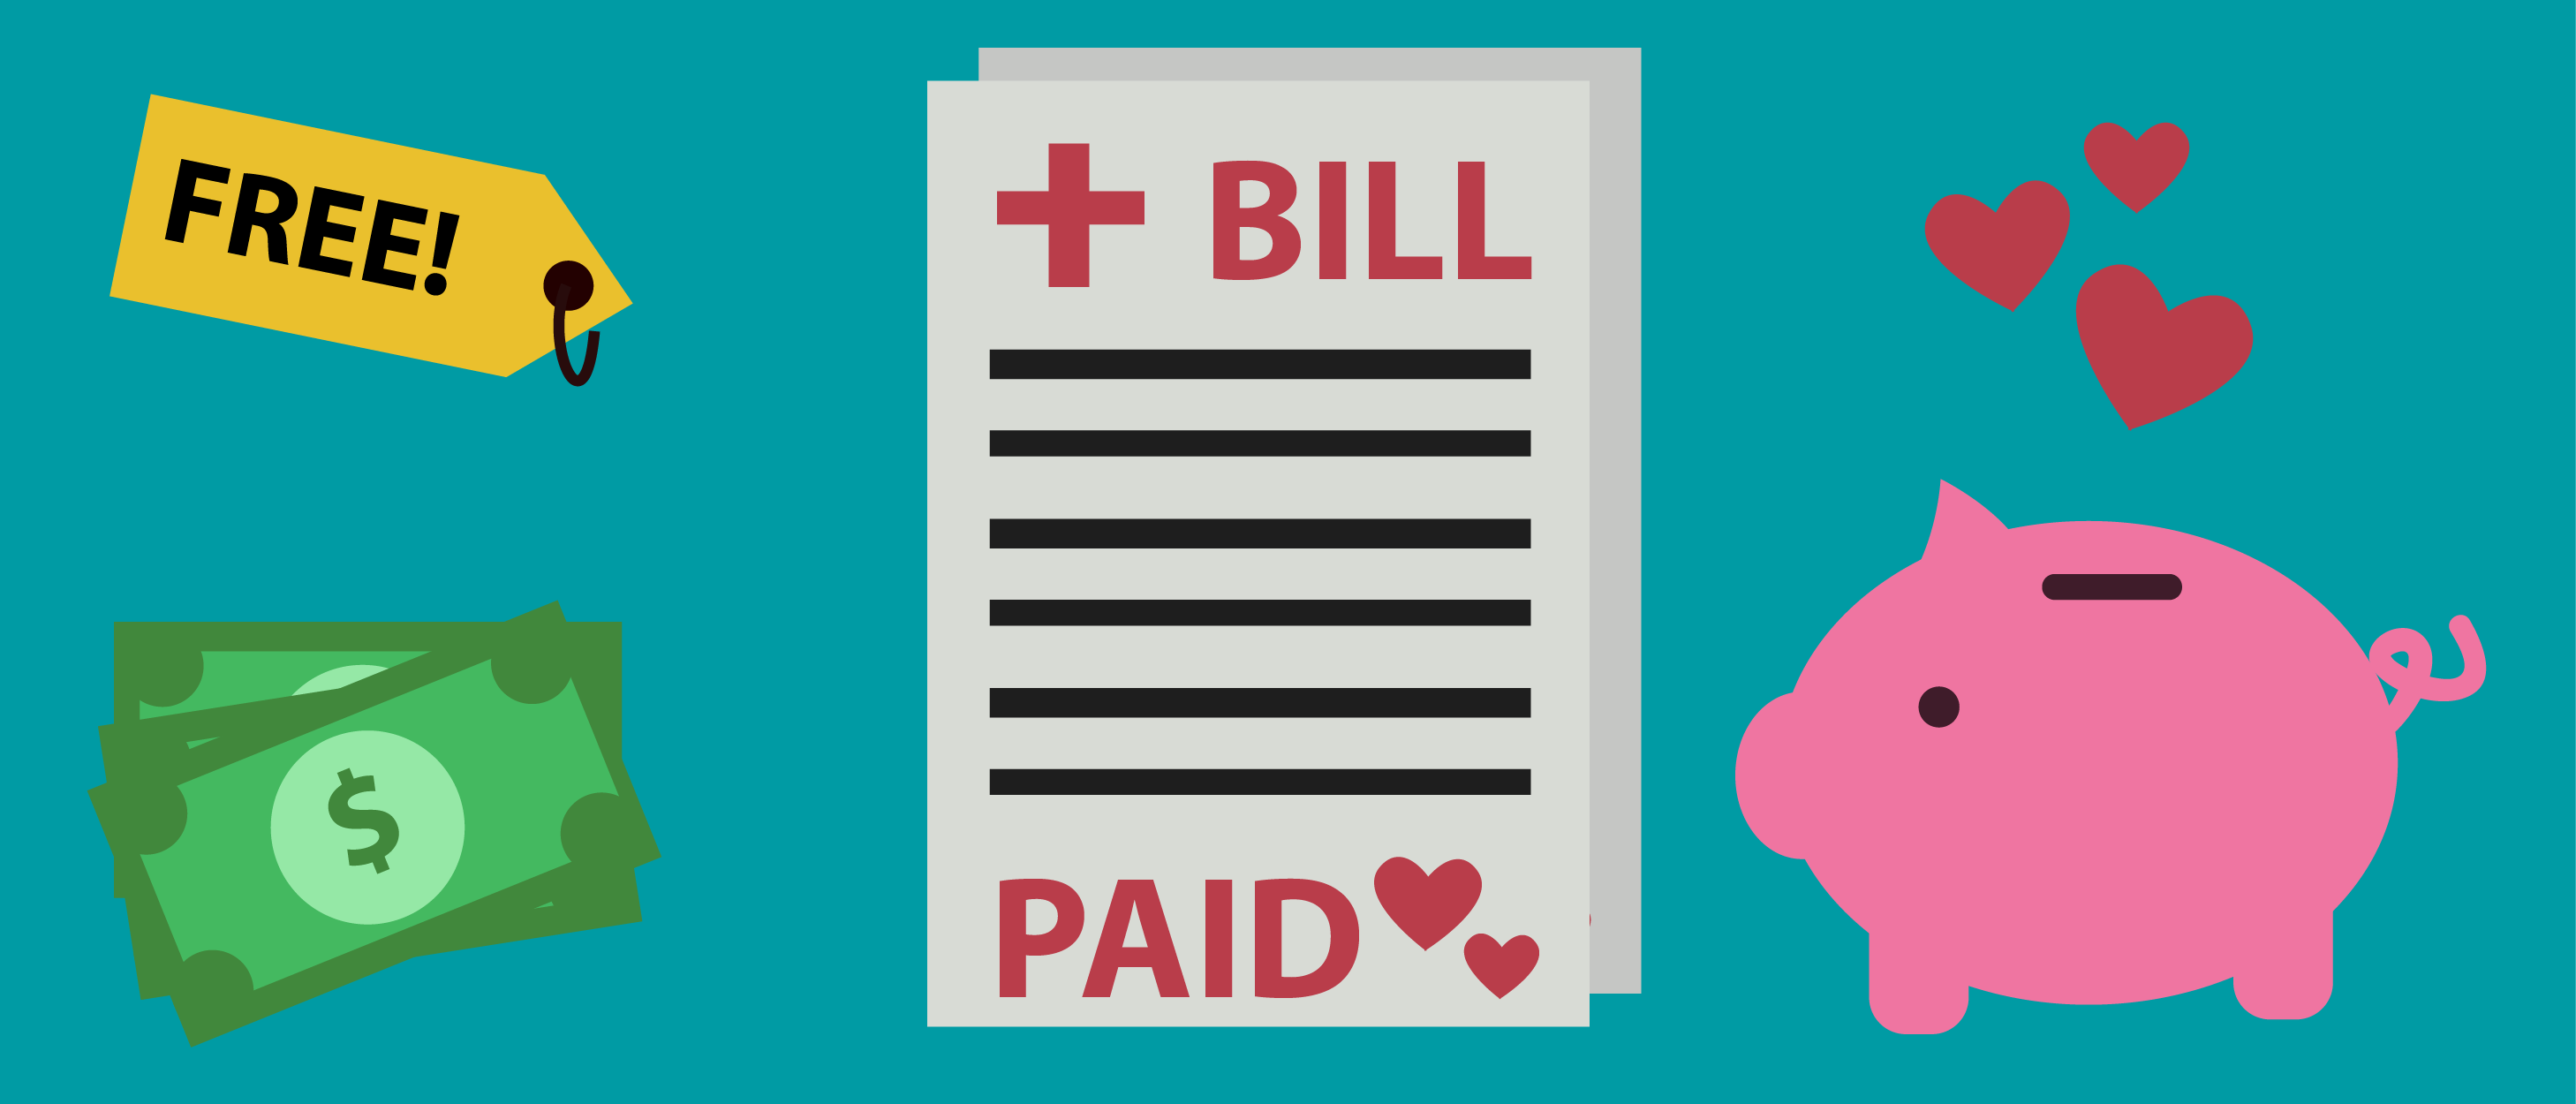 Amazing charities that help. Bill clipart hospital bill